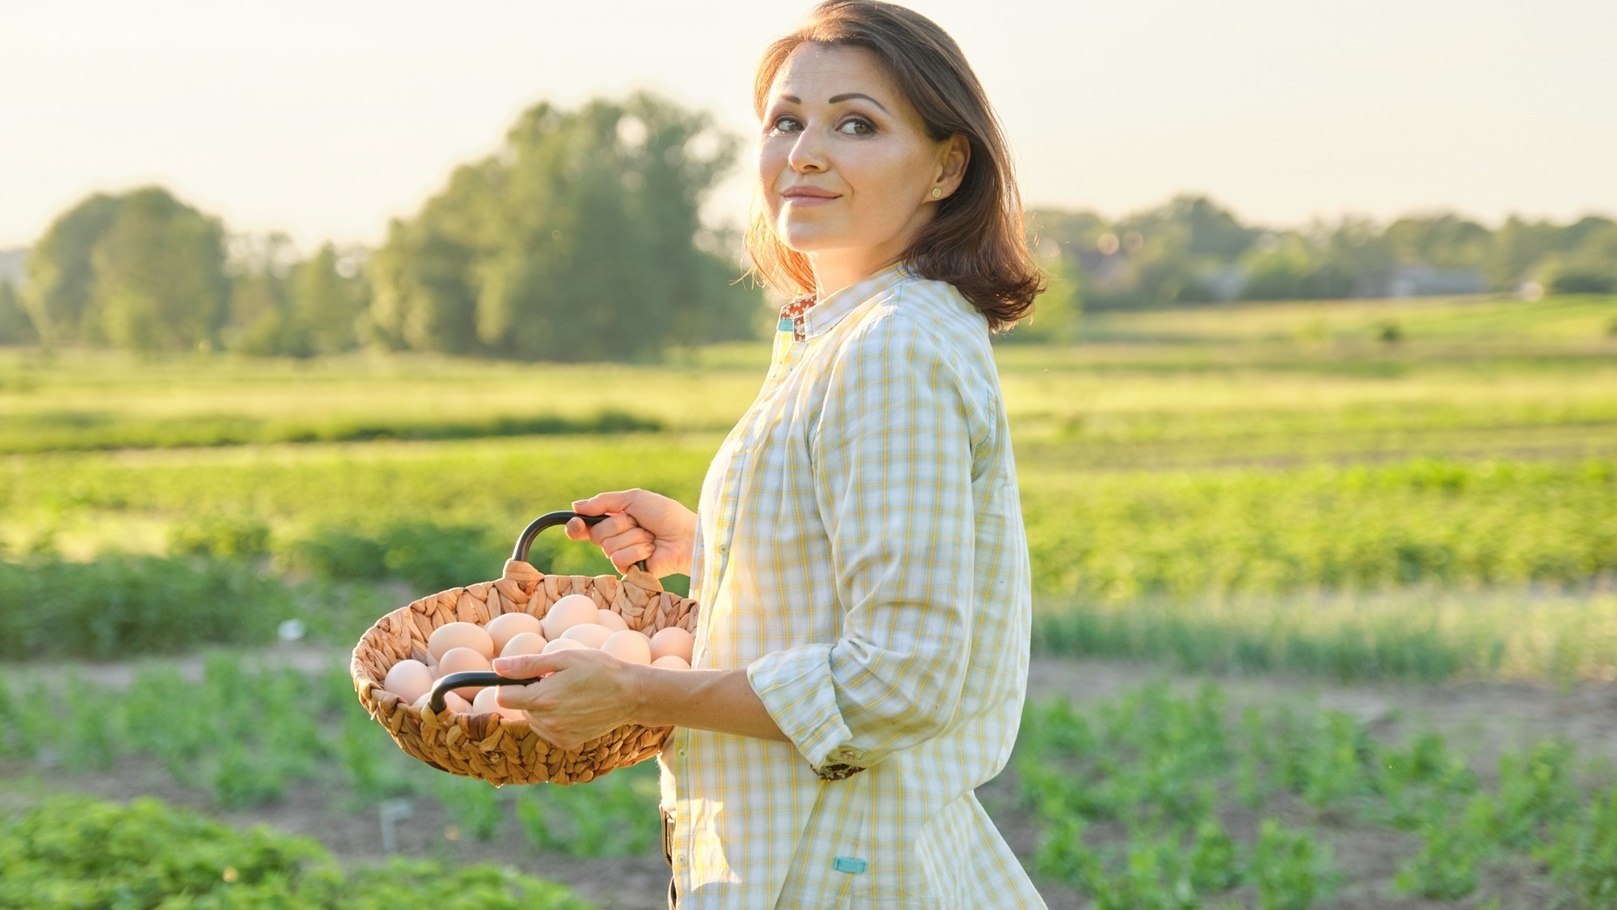 outdoor-portrait-of-farmer-woman-with-basket-of-fr-2022-01-31-21-41-43-utc